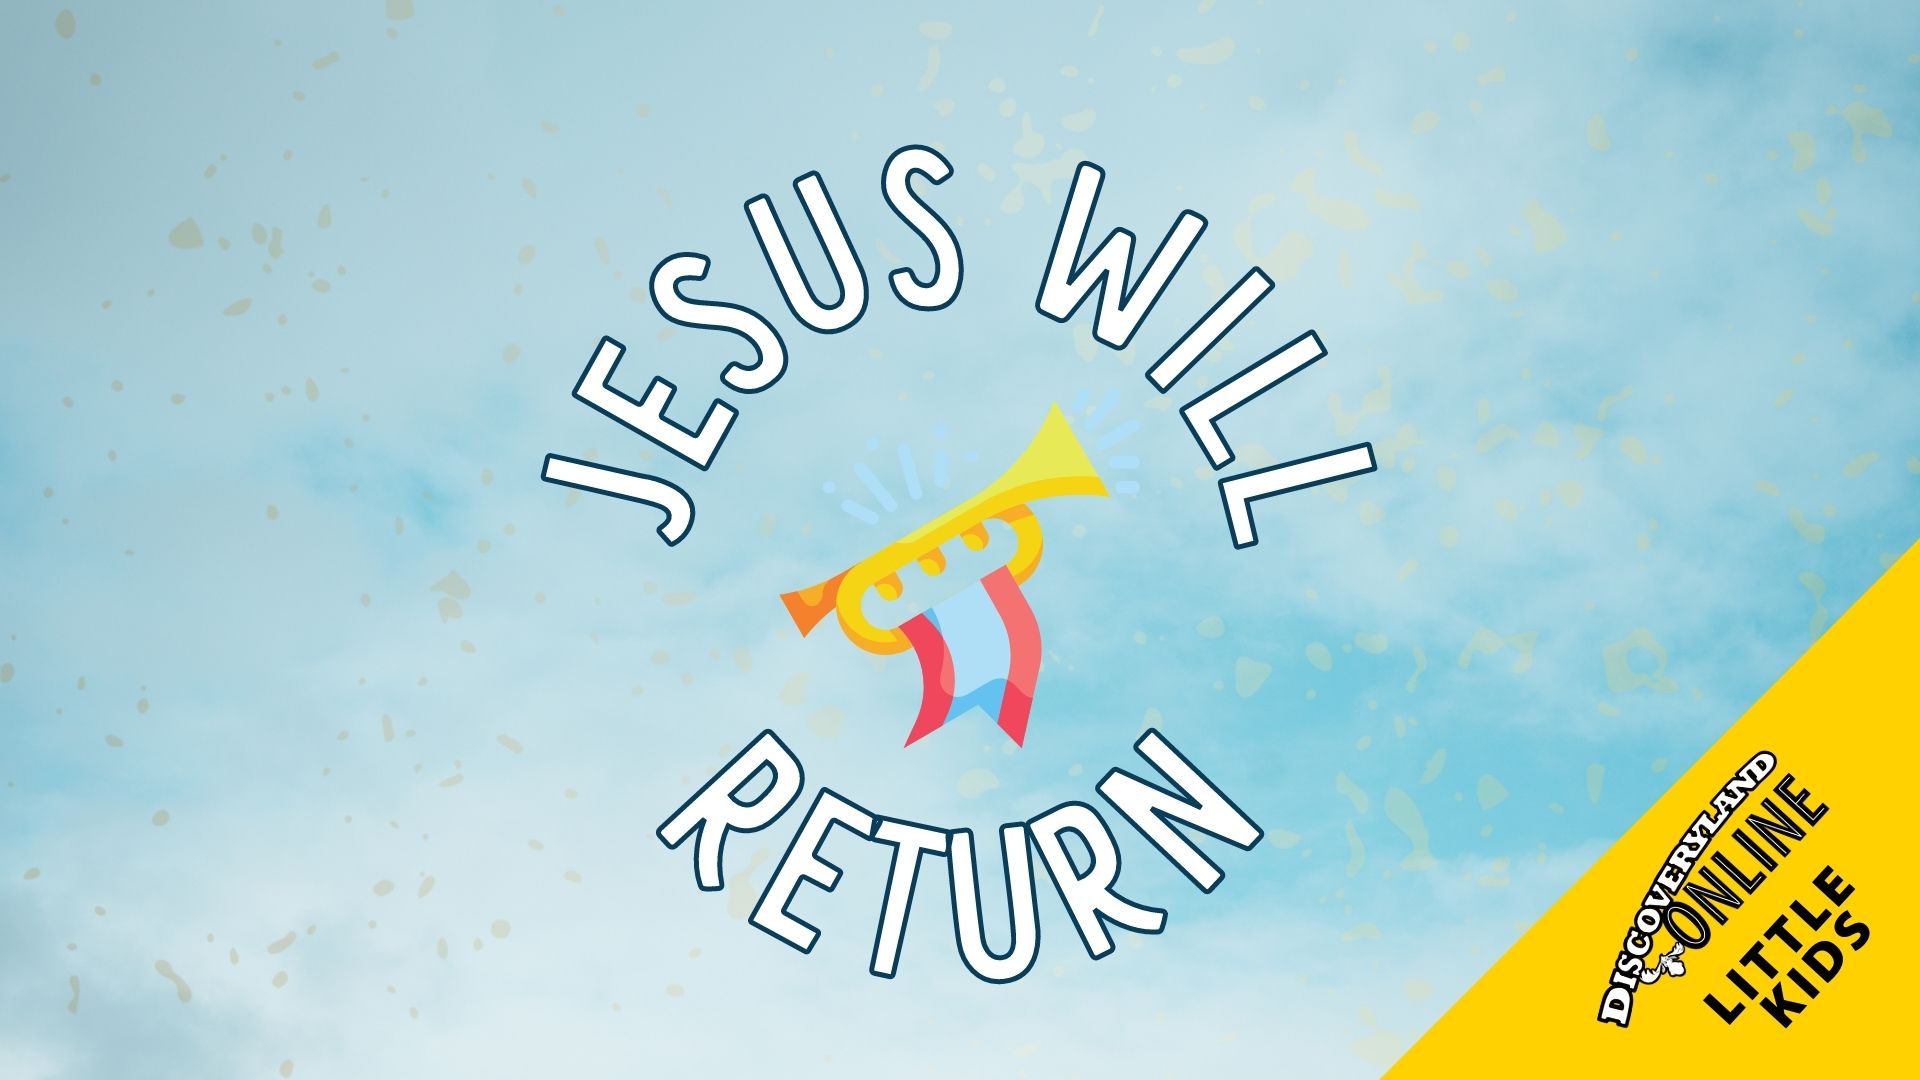 Jesus Will Return